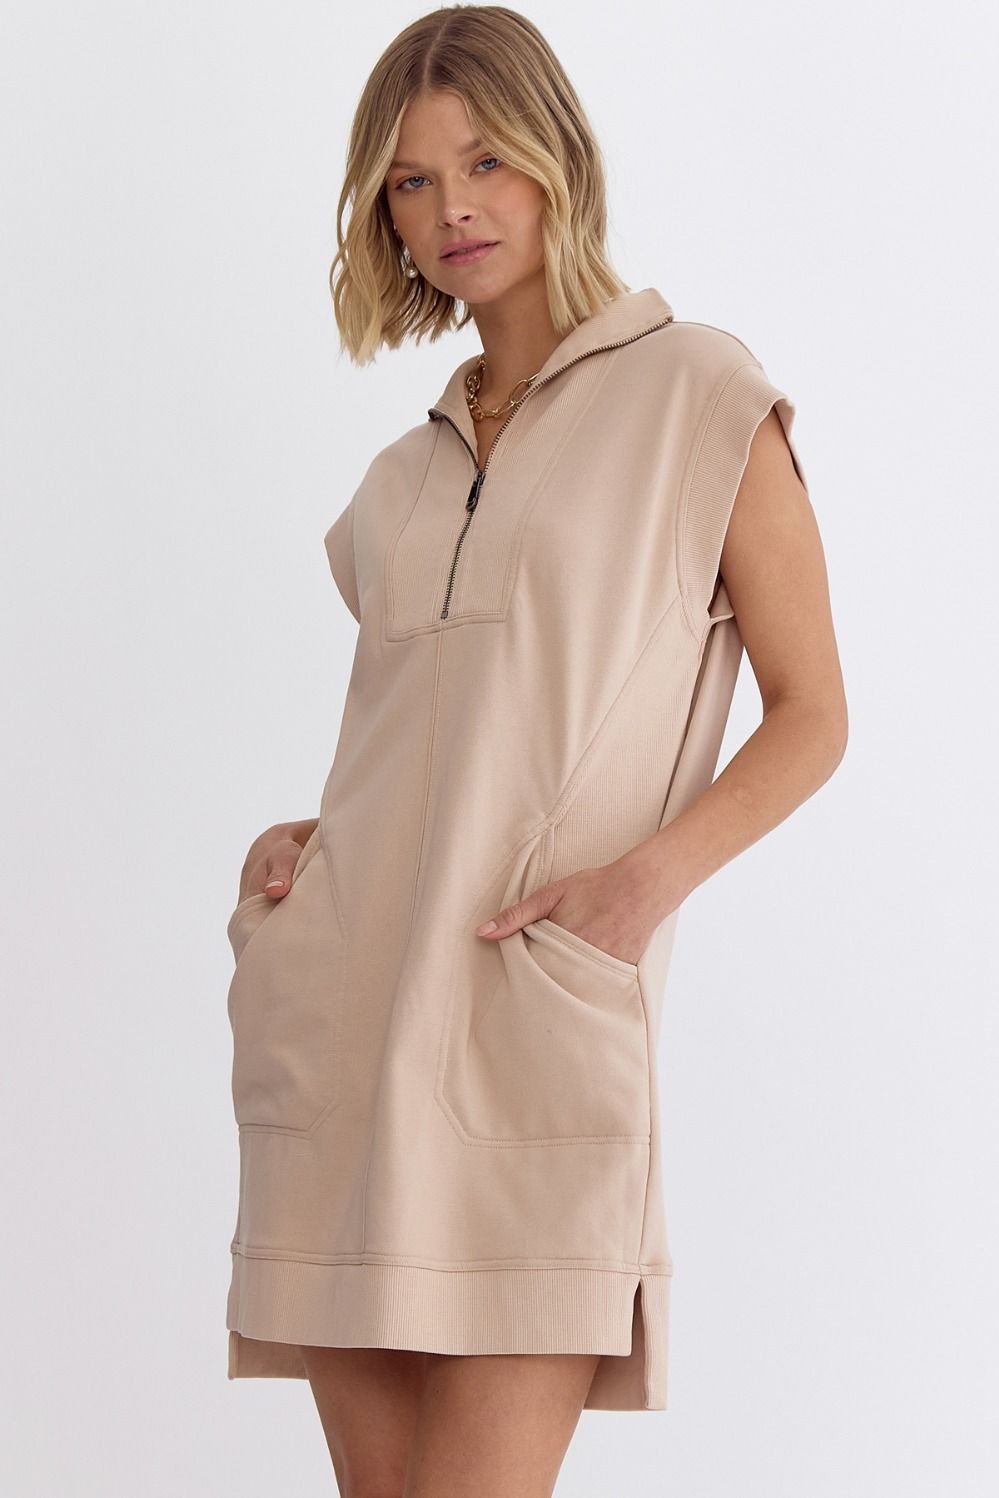 ENTRO INC Women's Dresses TAUPE / S Solid Mock-Neck Sleeveless Mini Dress || David's Clothing D22130